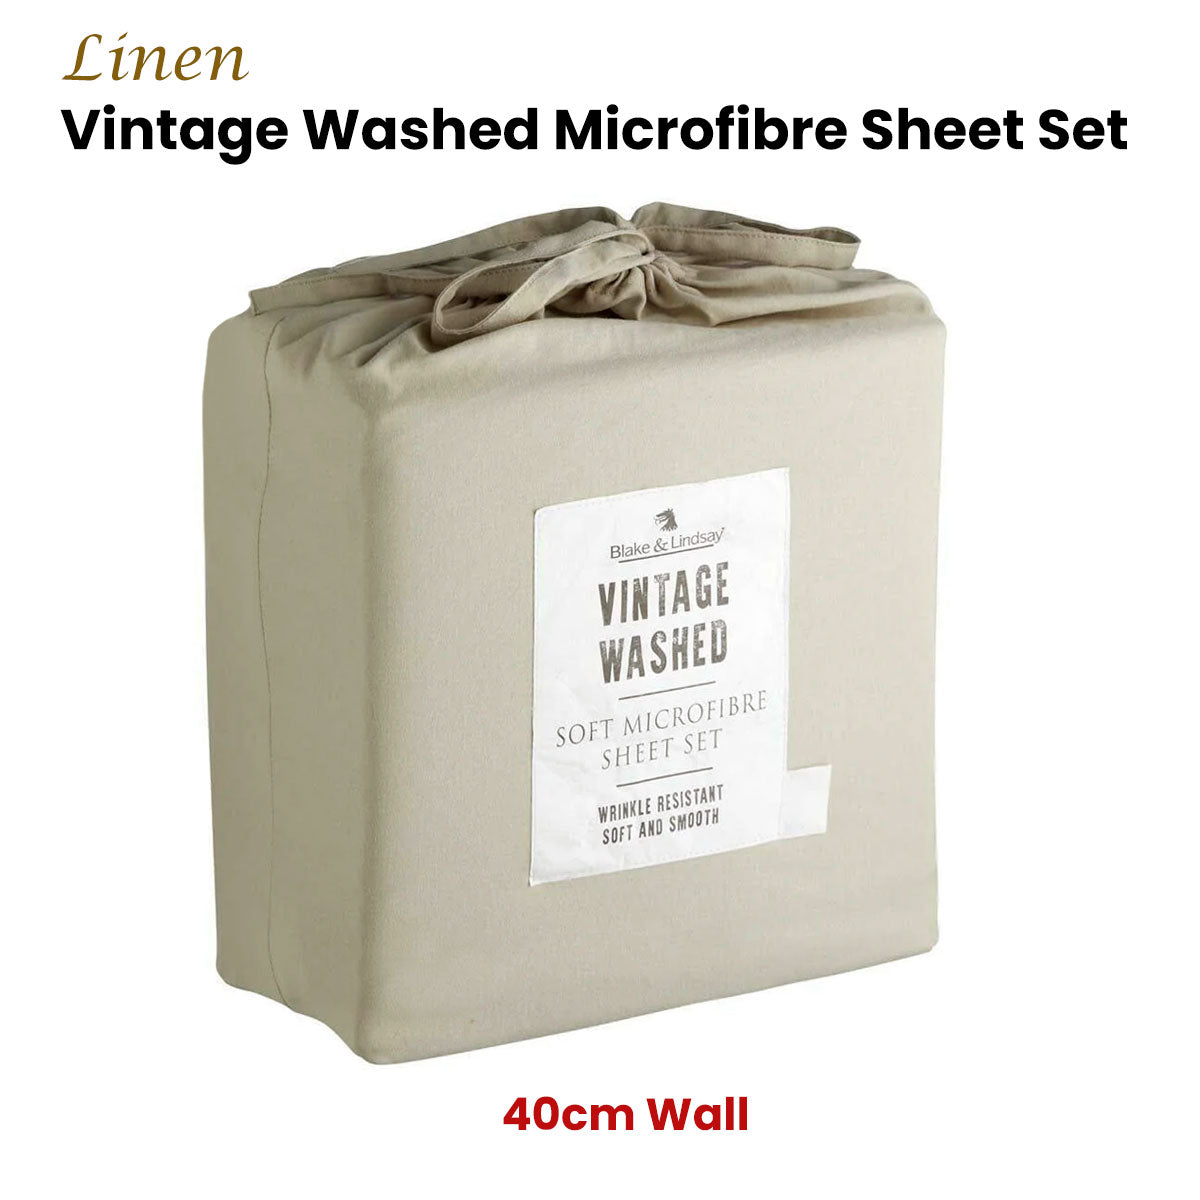 Blake & Lindsay Linen Vintage Washed Microfibre Sheet Set 40cm Wall Single